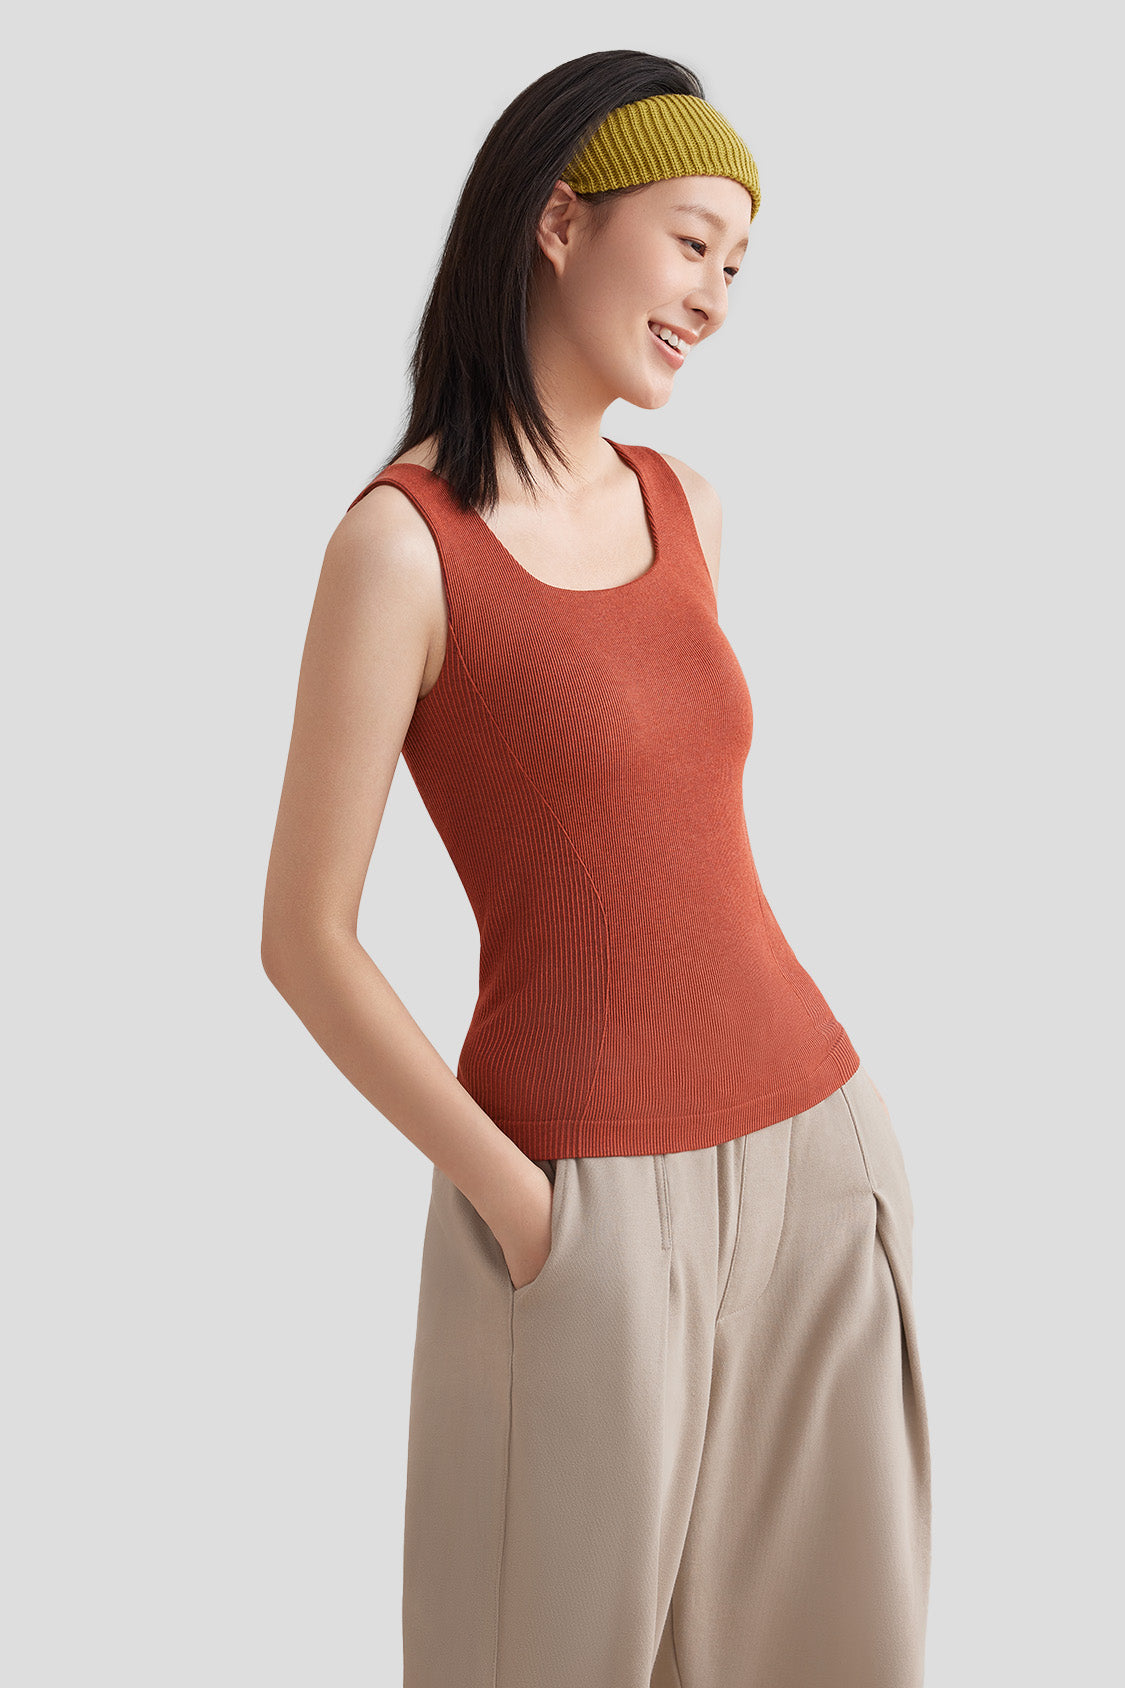 beneunder women's aw bra in thermal vest #color_scarlet red